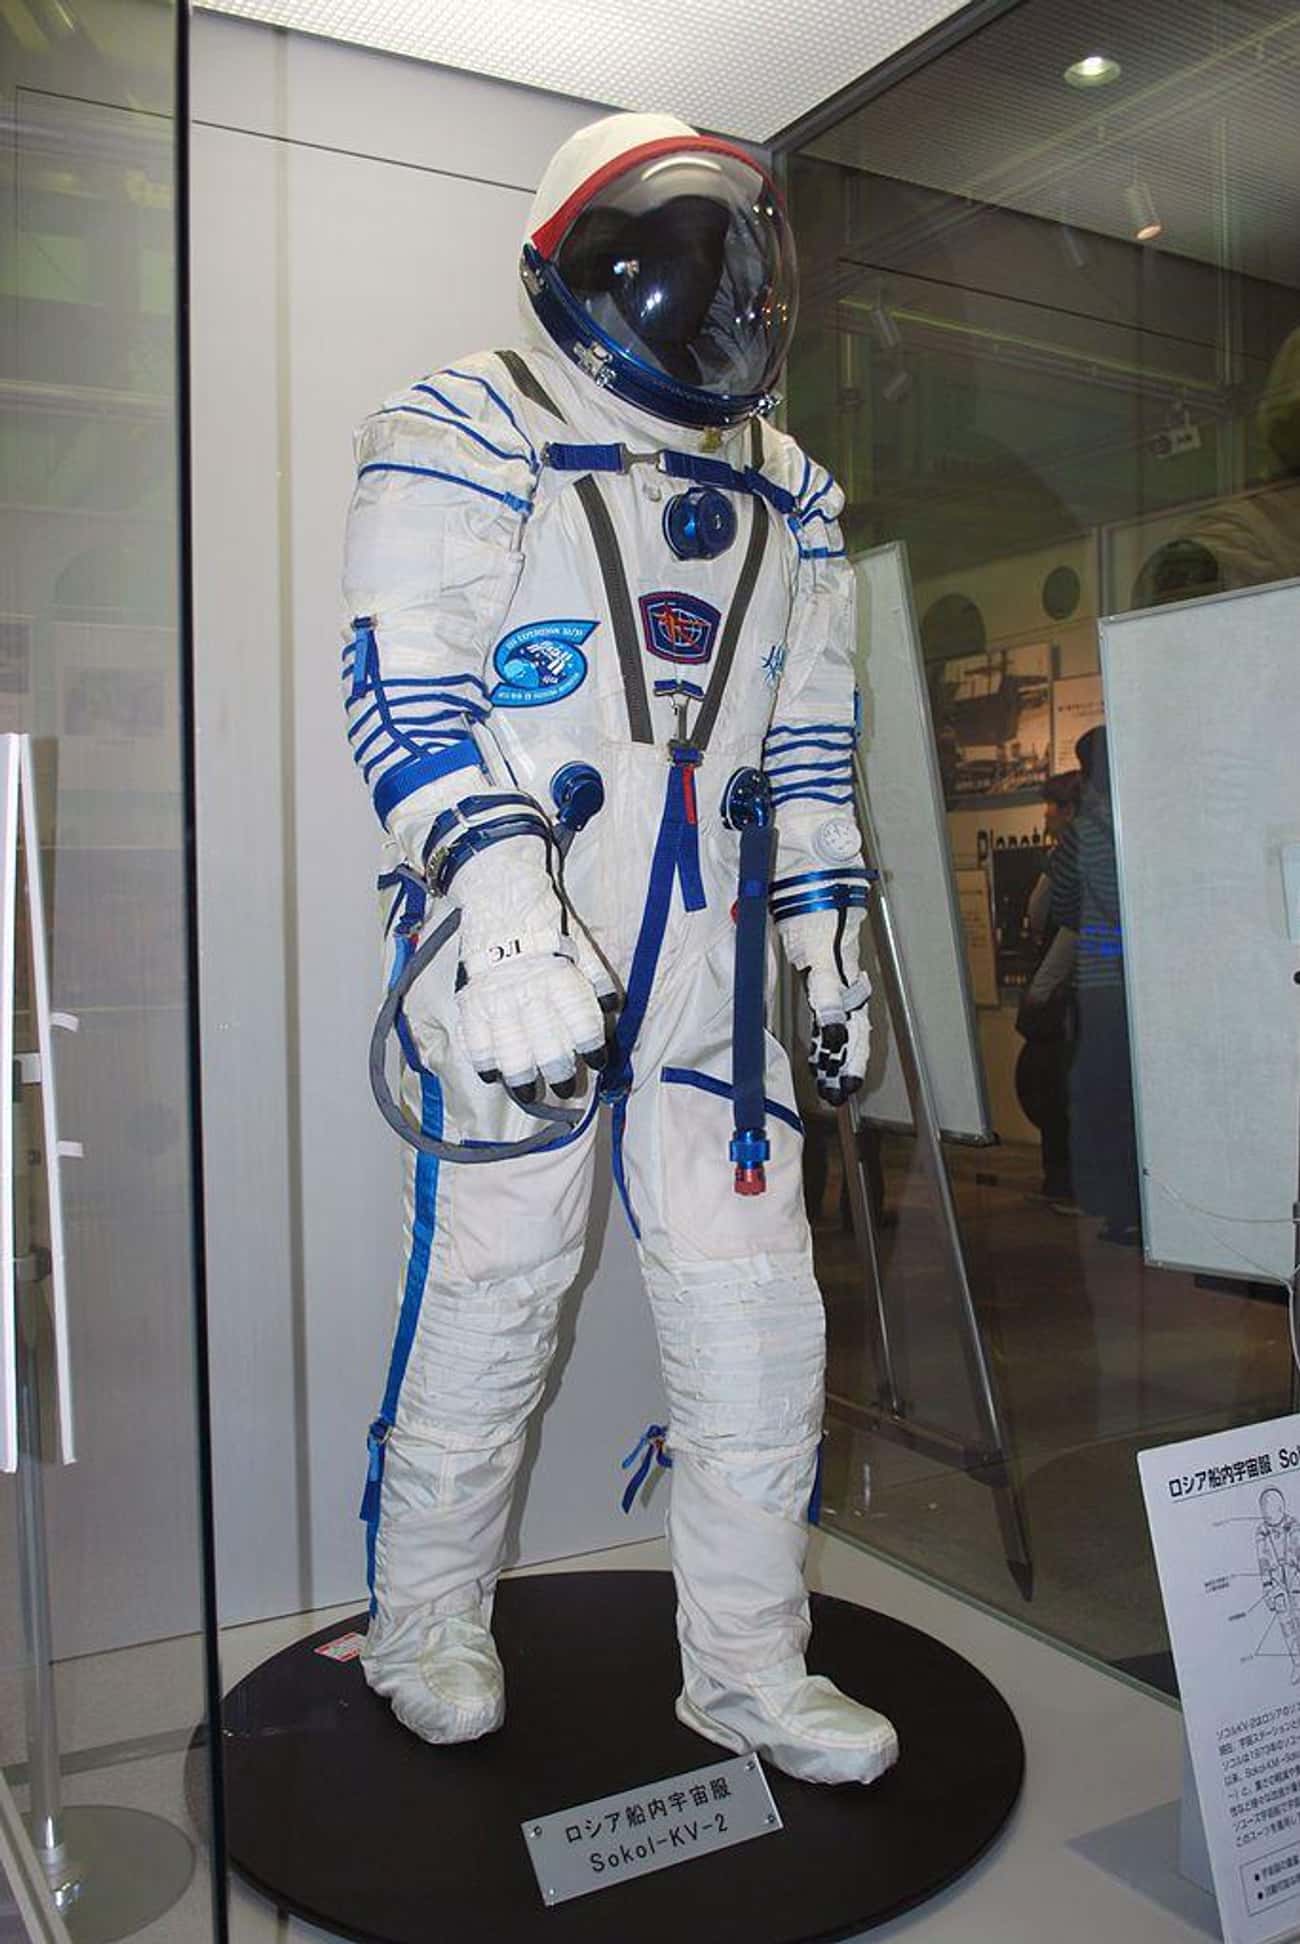 1973-2018: Sokol Space Suit, USSR